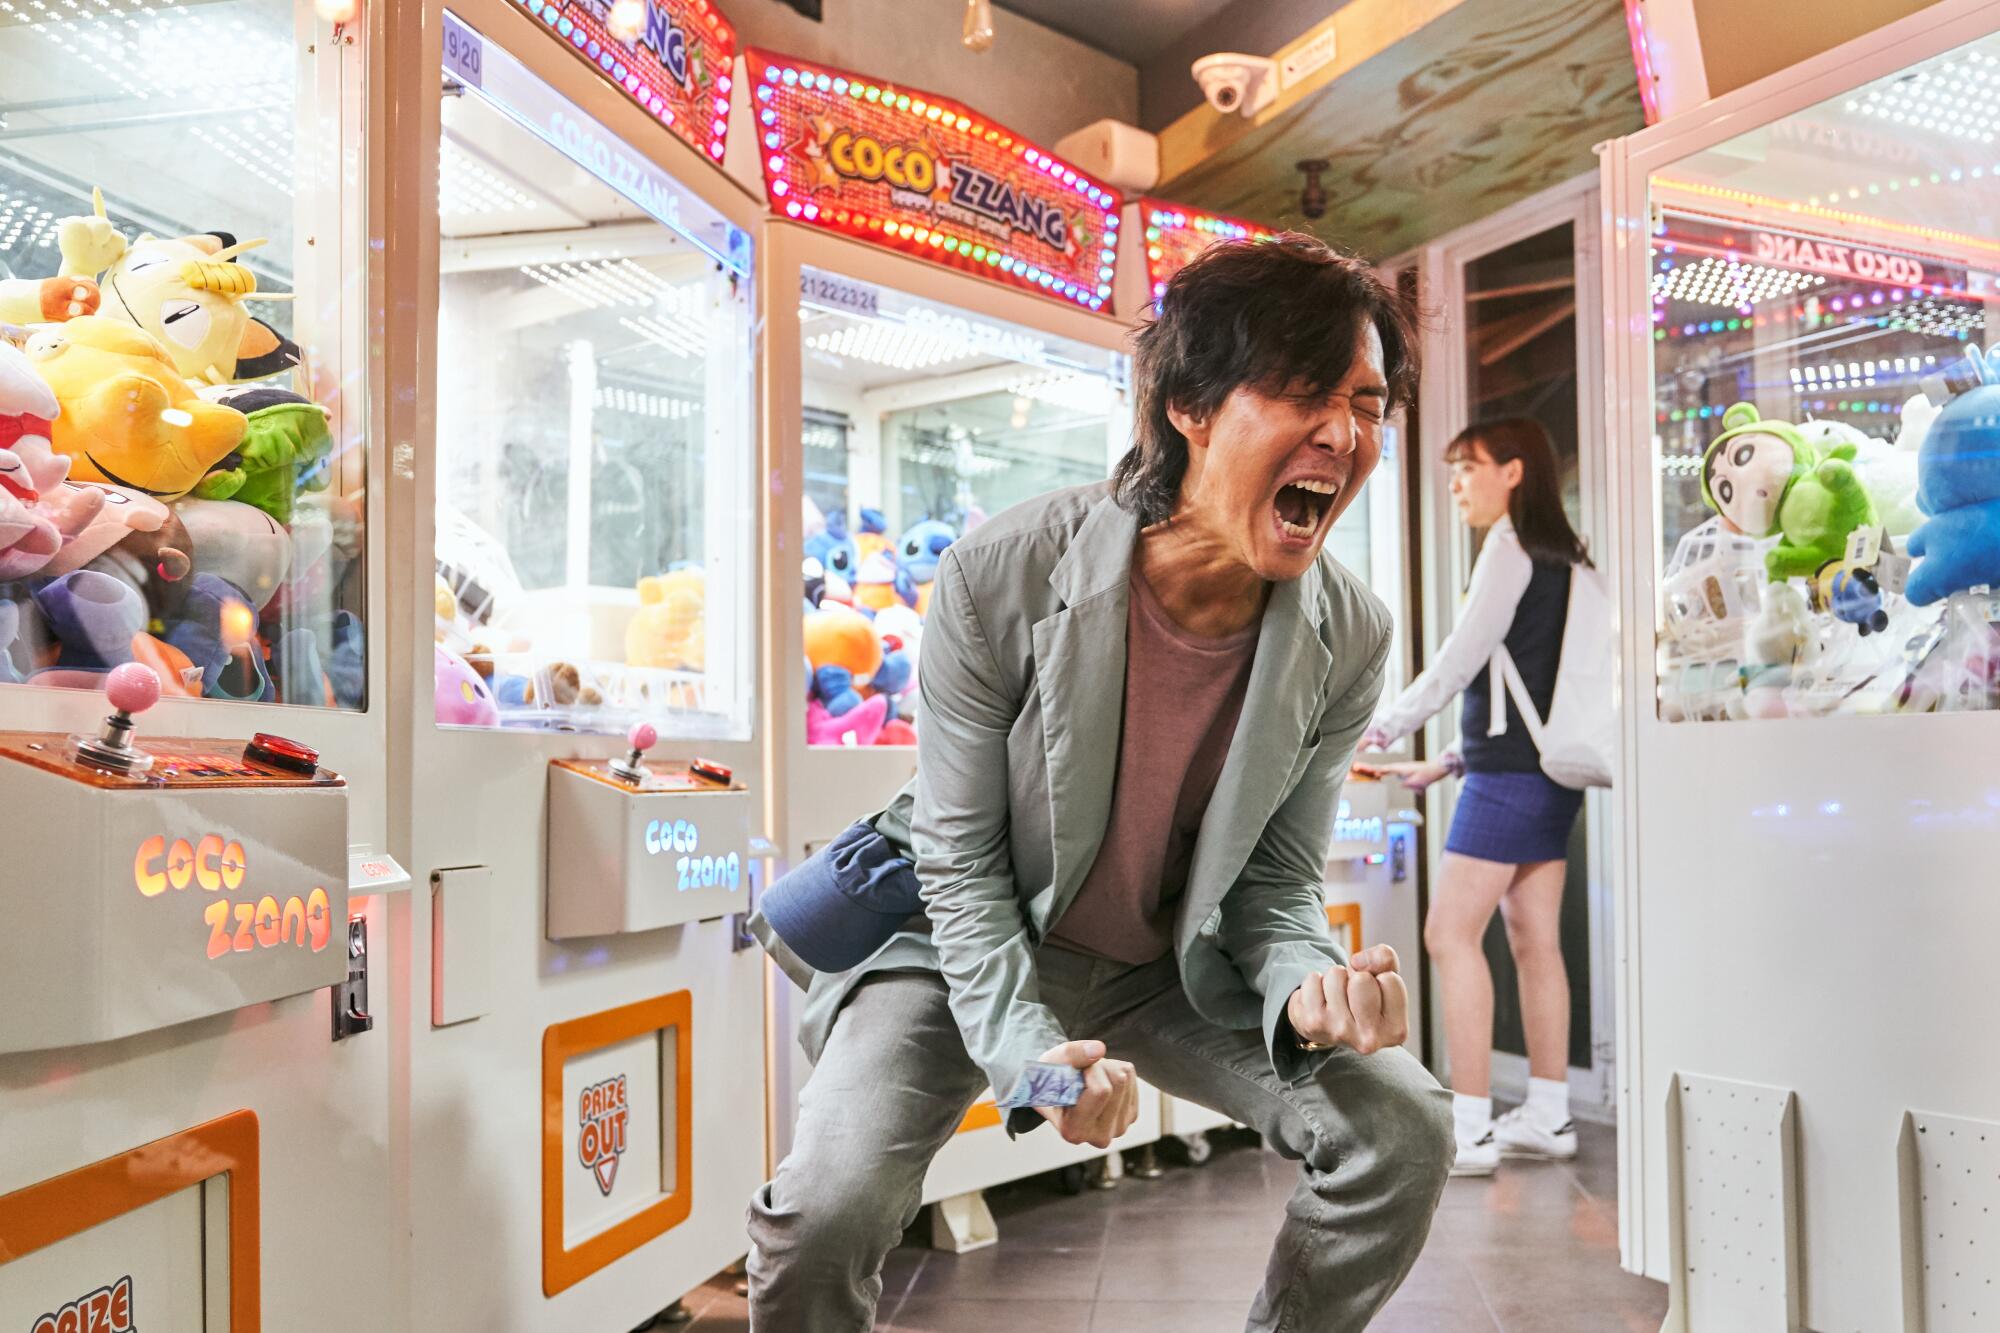 A man screams in frustration in an arcade in Korea.